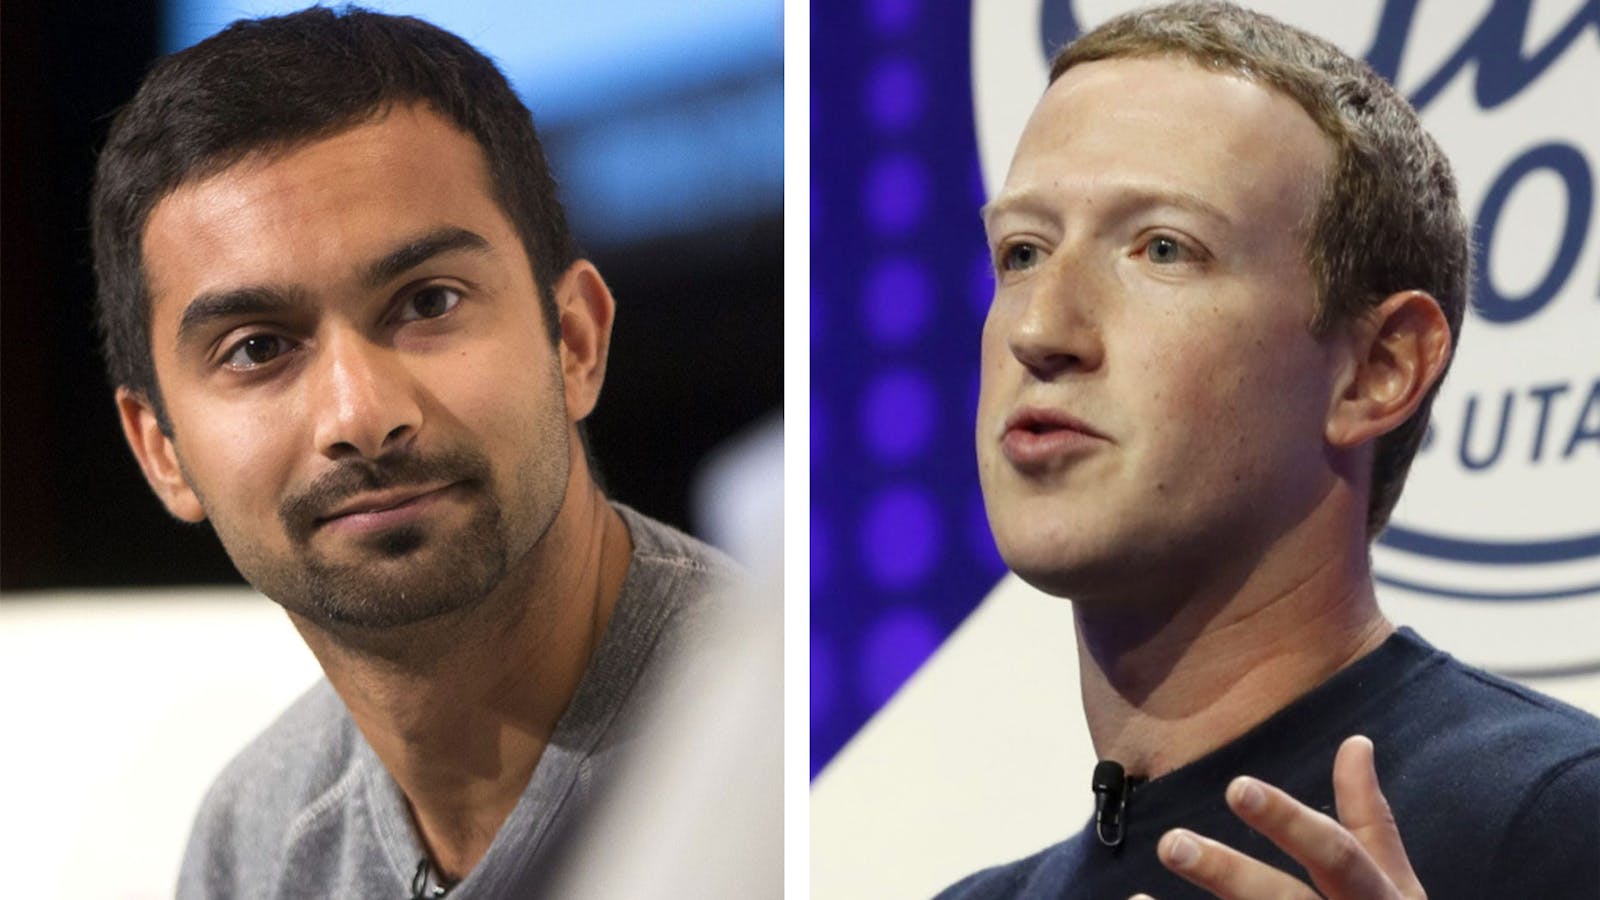 Instacart CEO Apoorva Mehta, left, and Facebook CEO Mark Zuckerberg. Photos by Bloomberg